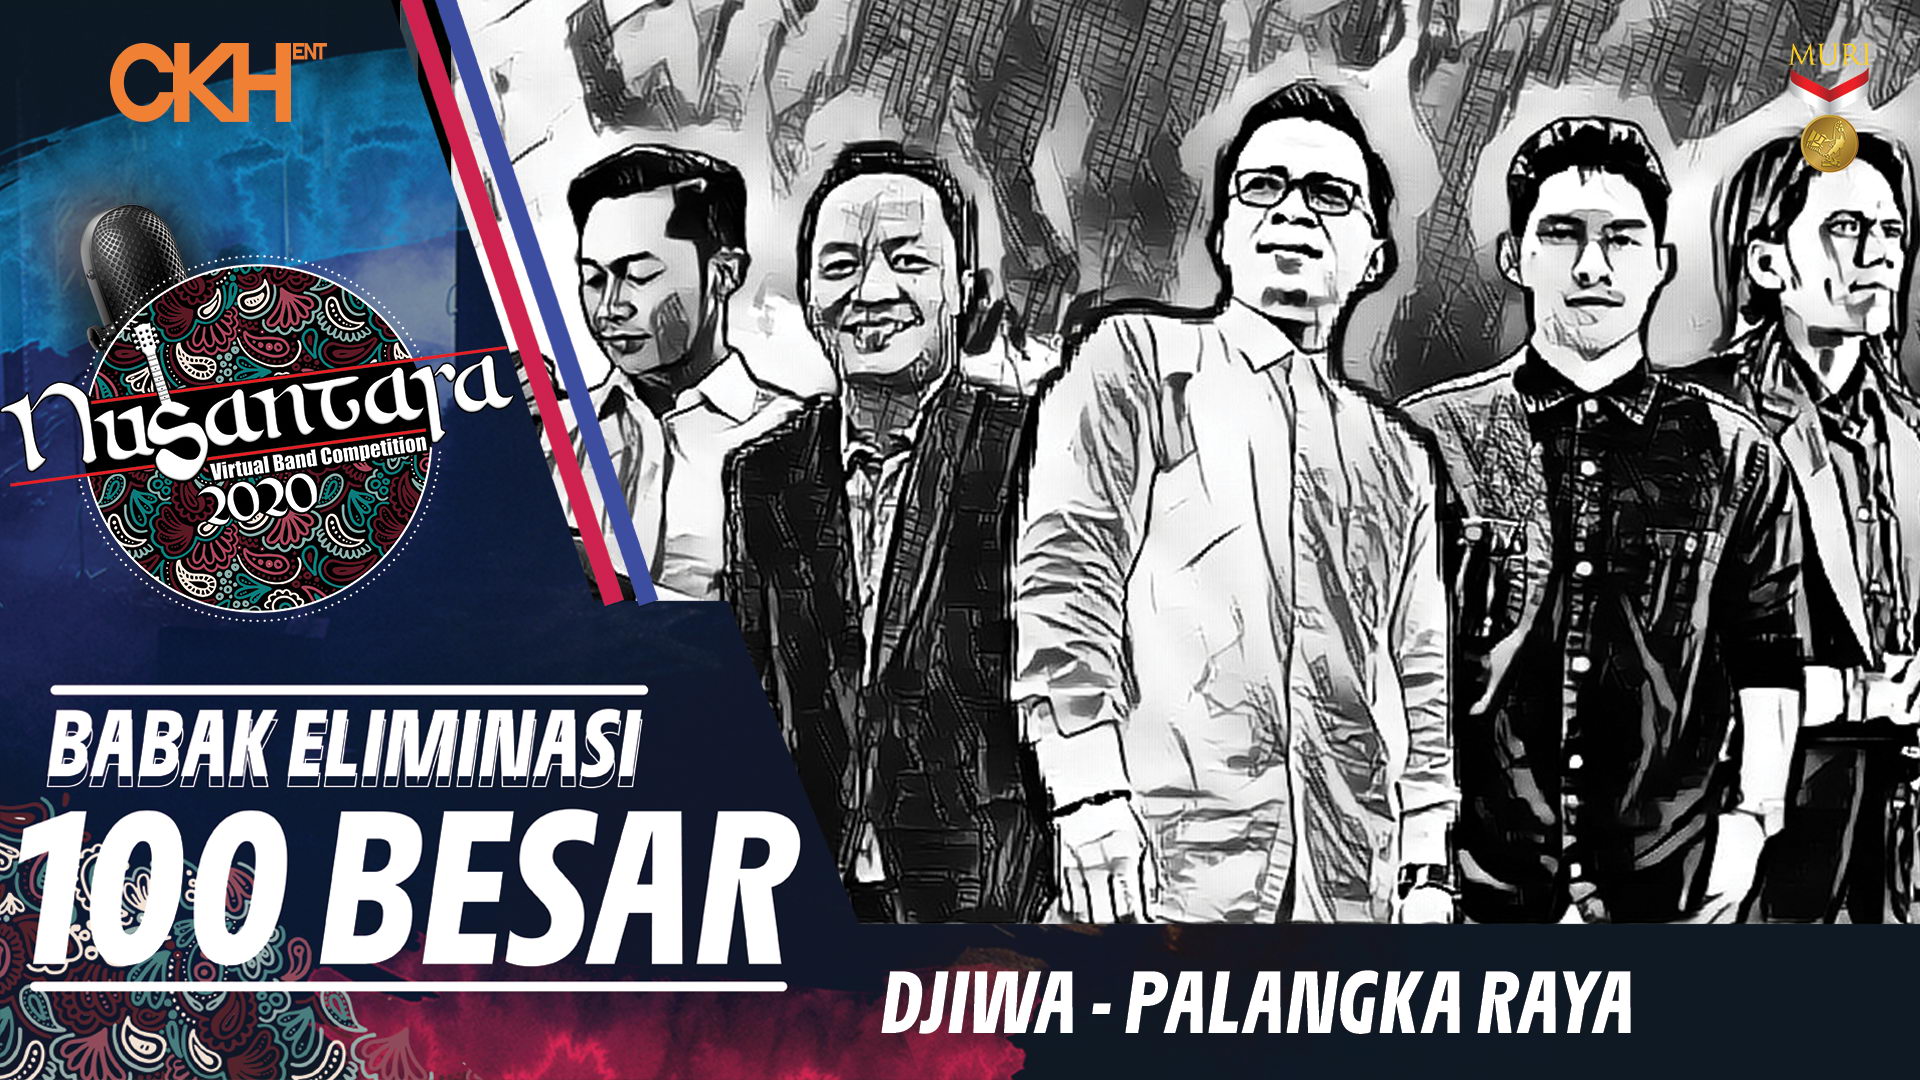 DJIWA - Eliminasi 100 Besar Nusantara Virtual Band Competition